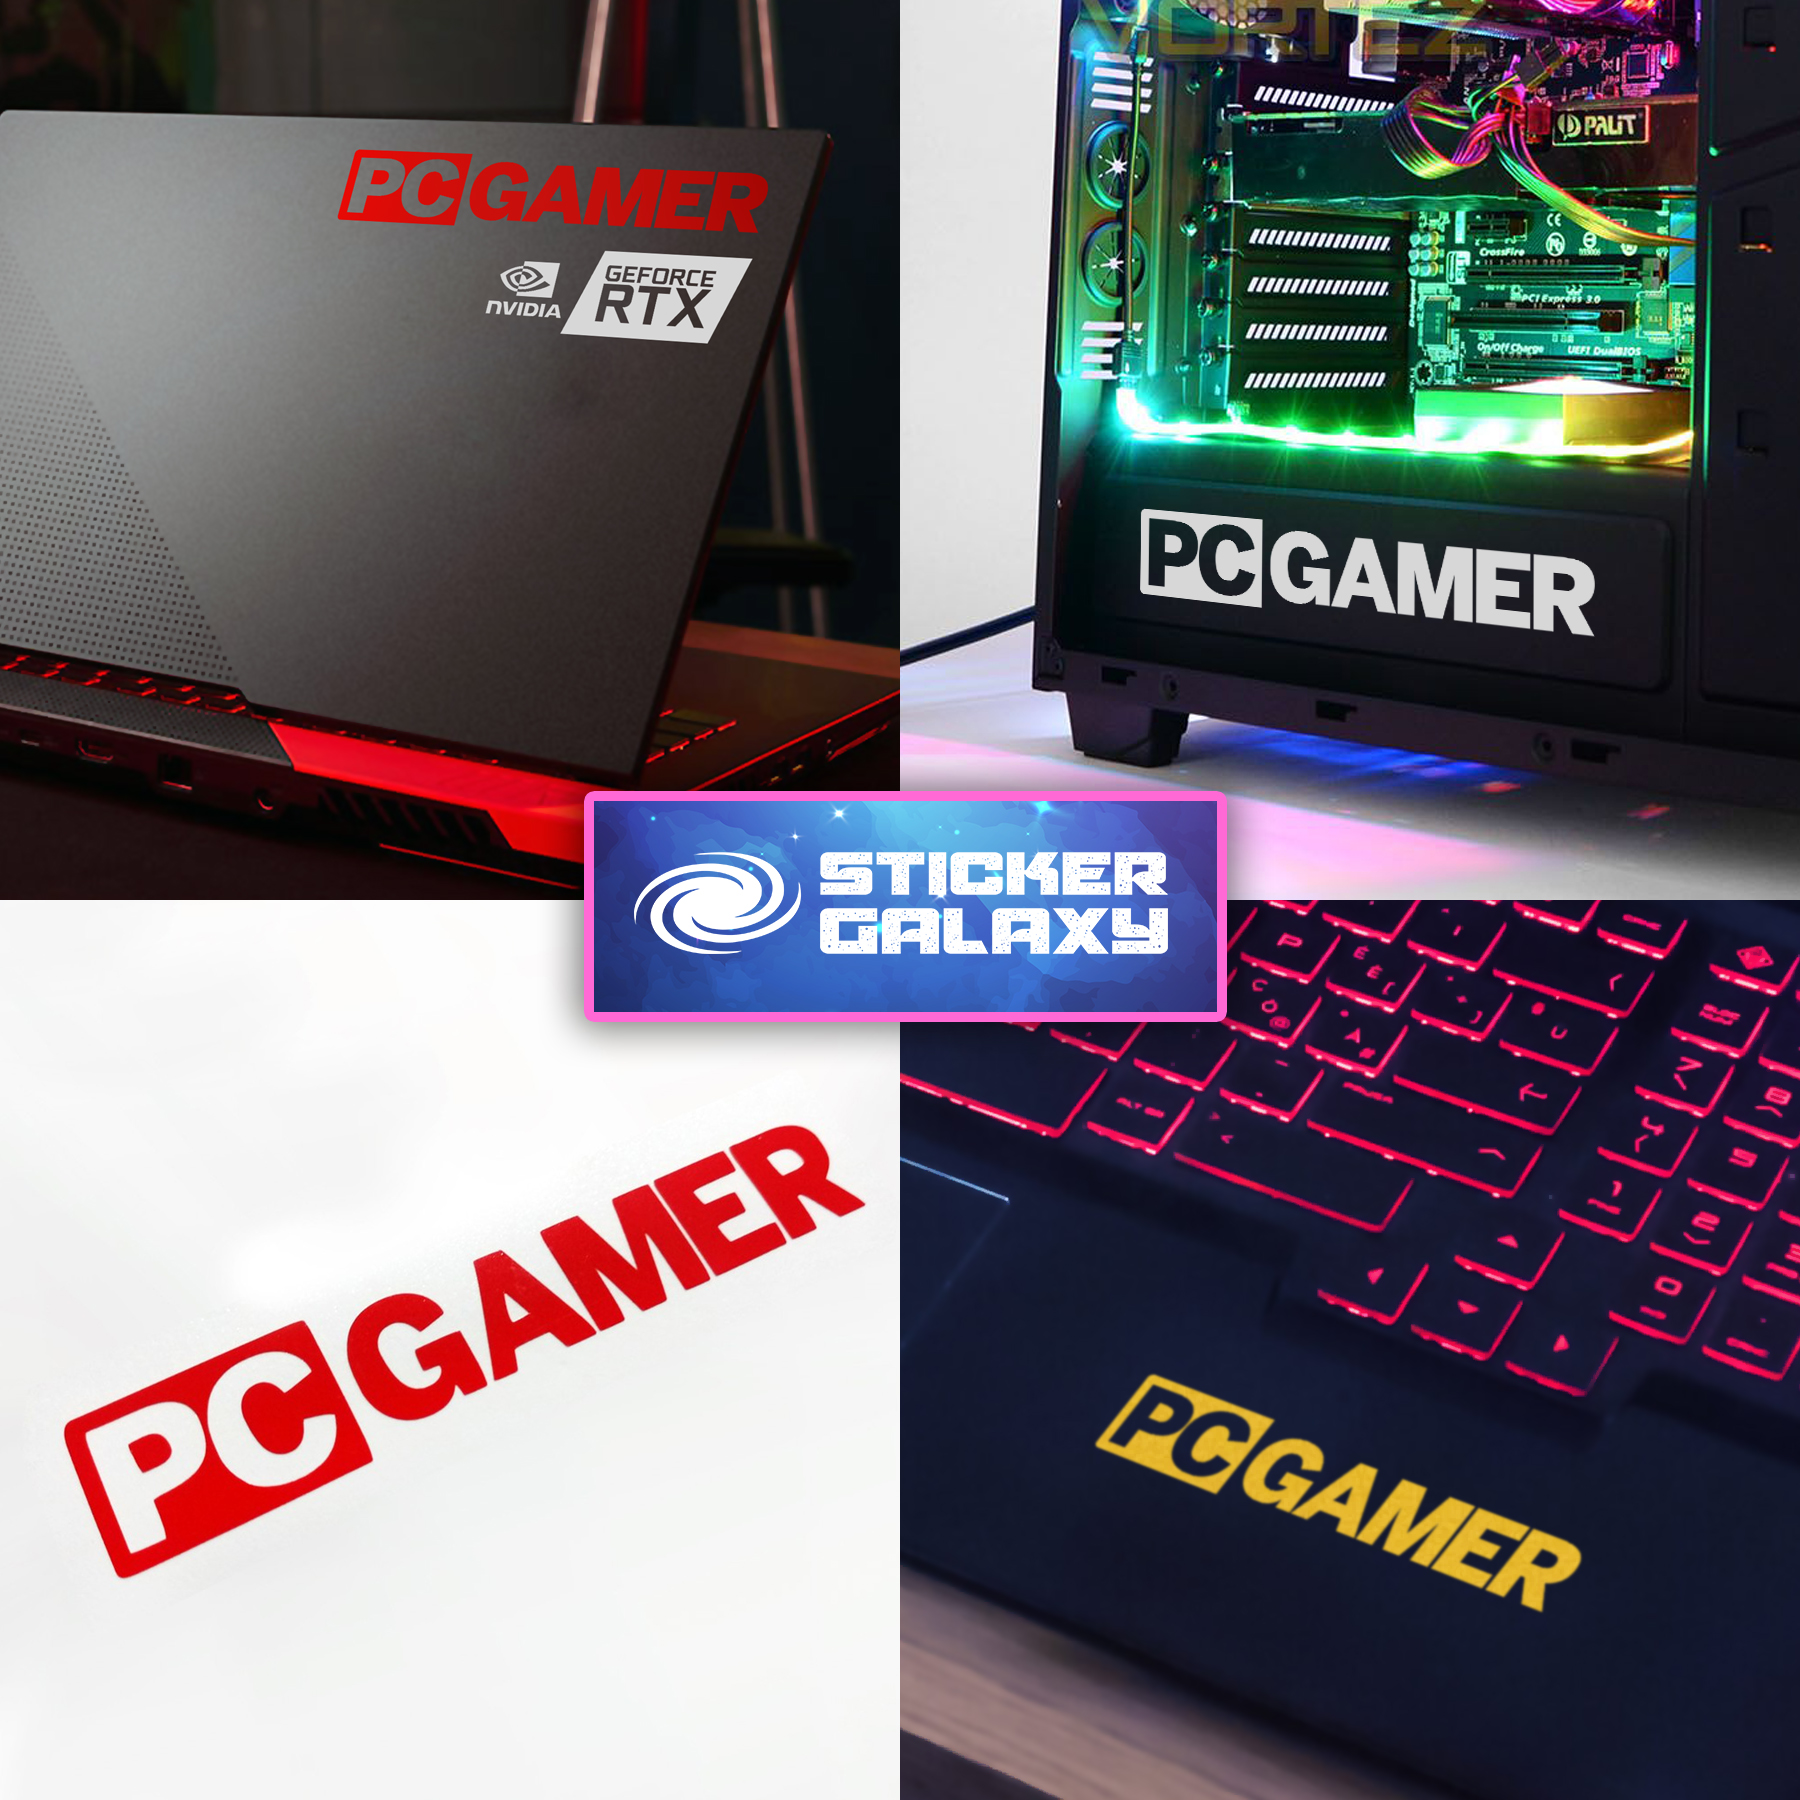 PC Gamer - Pc Gamer - Sticker